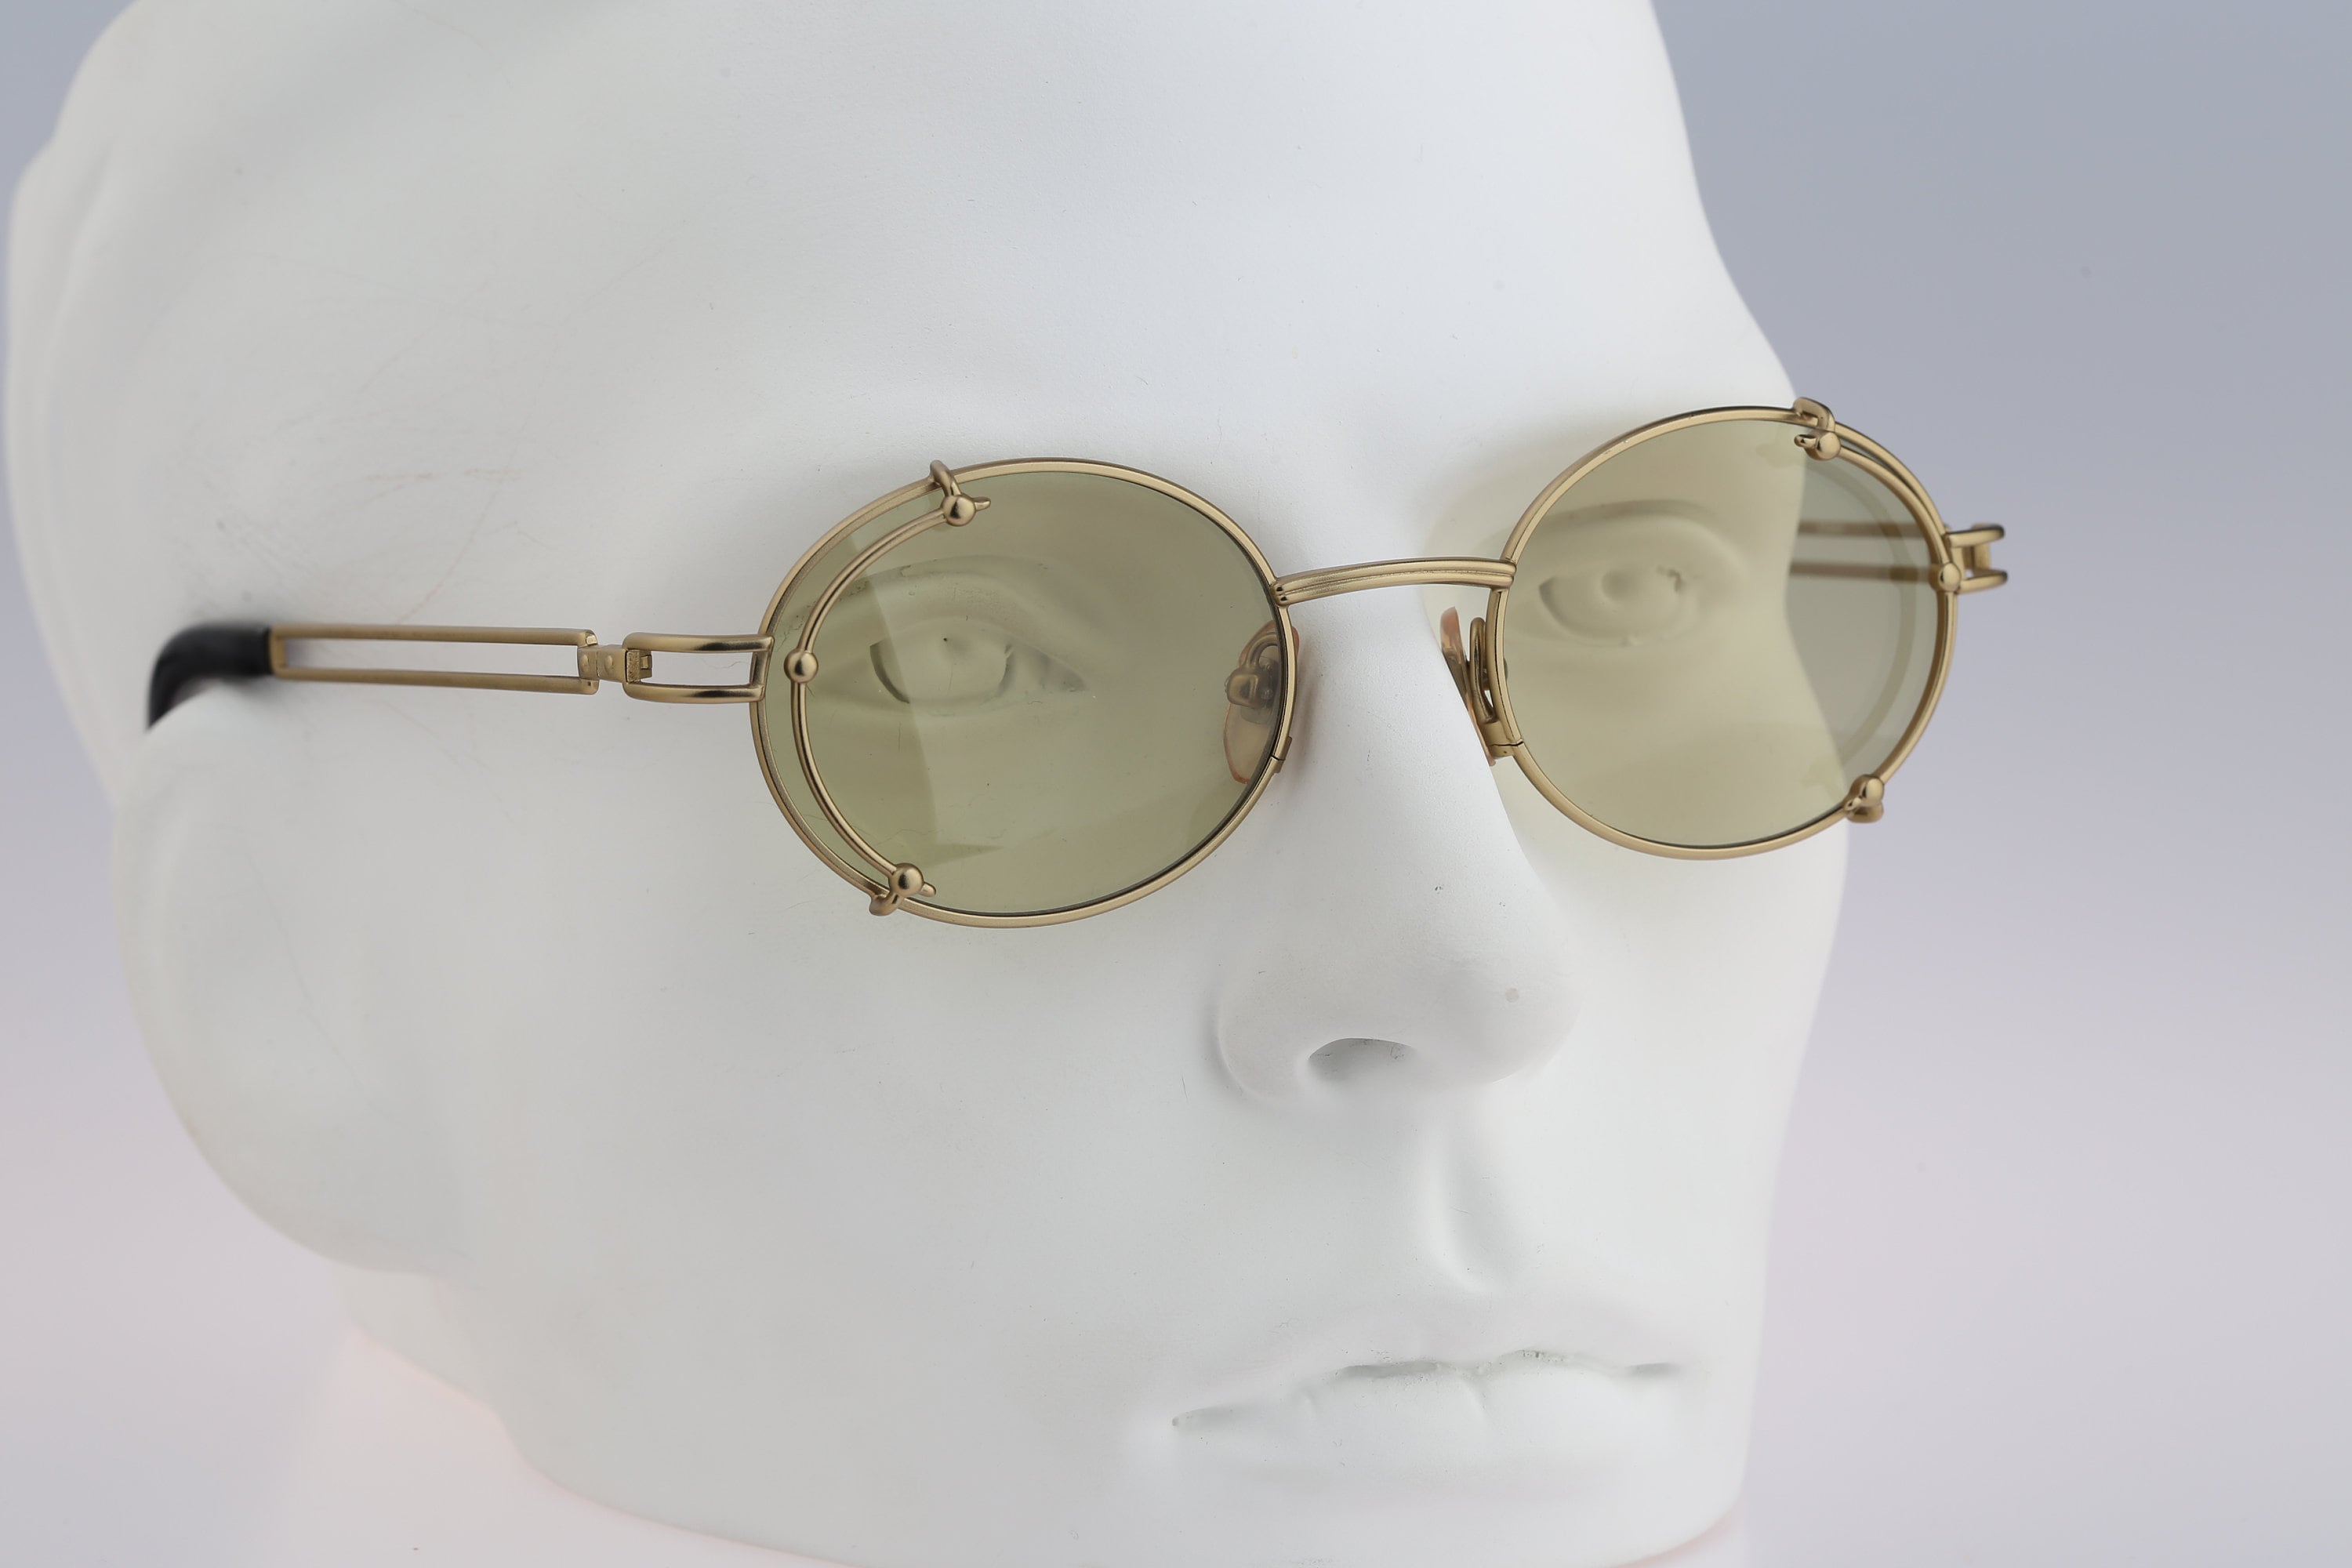 Yohji Yamamoto vintage sunglasses